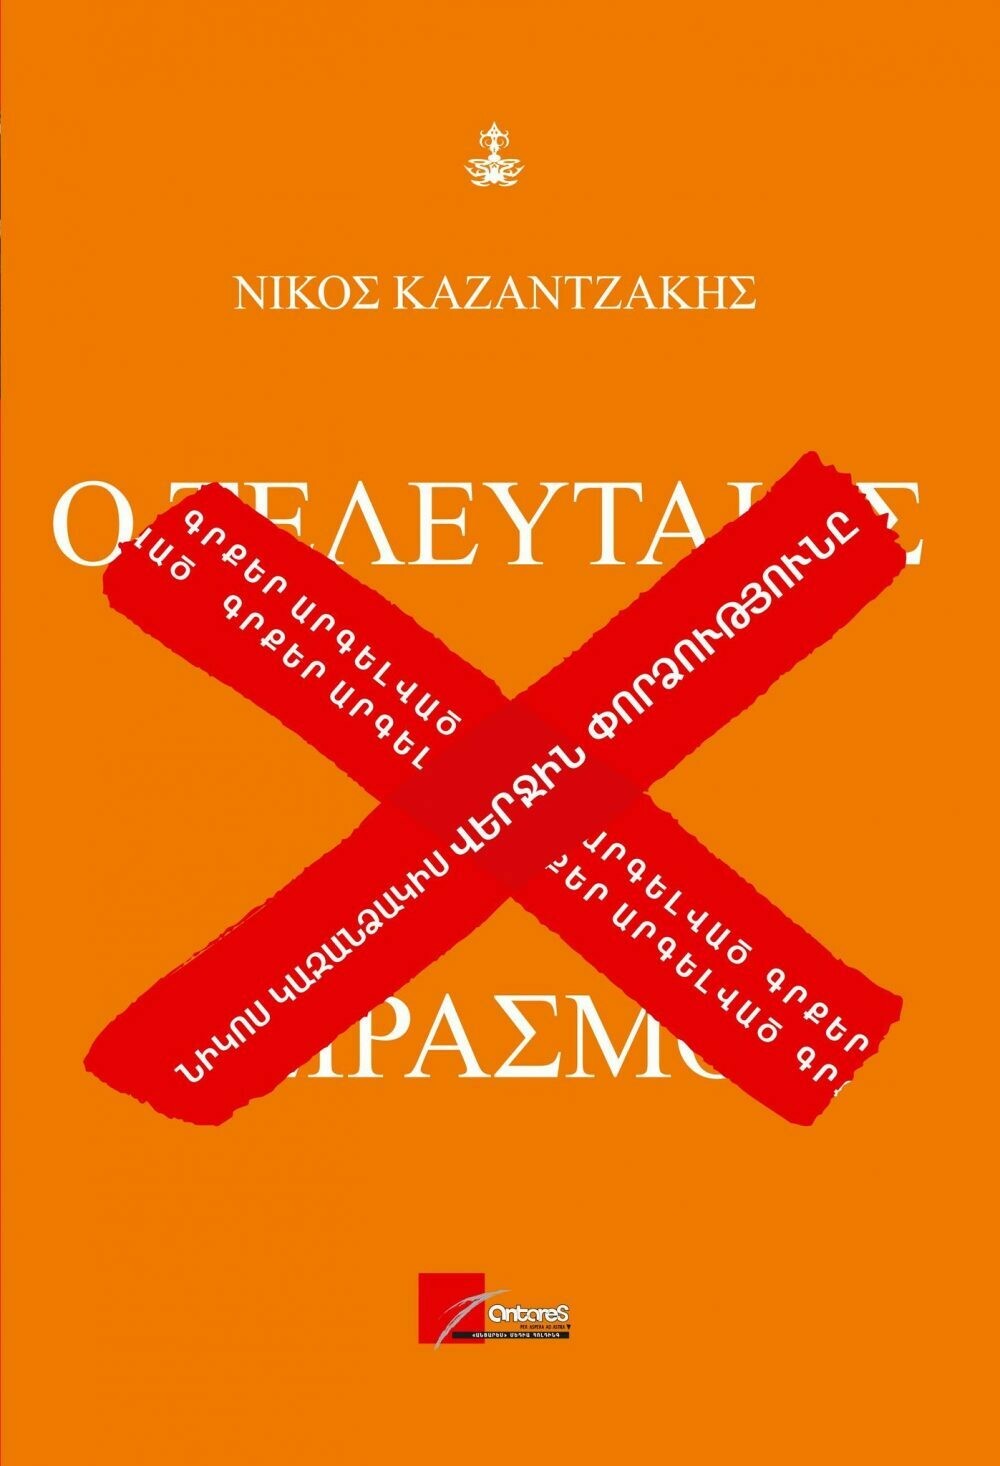 Nikos Kazantzakis - The Last Temptation